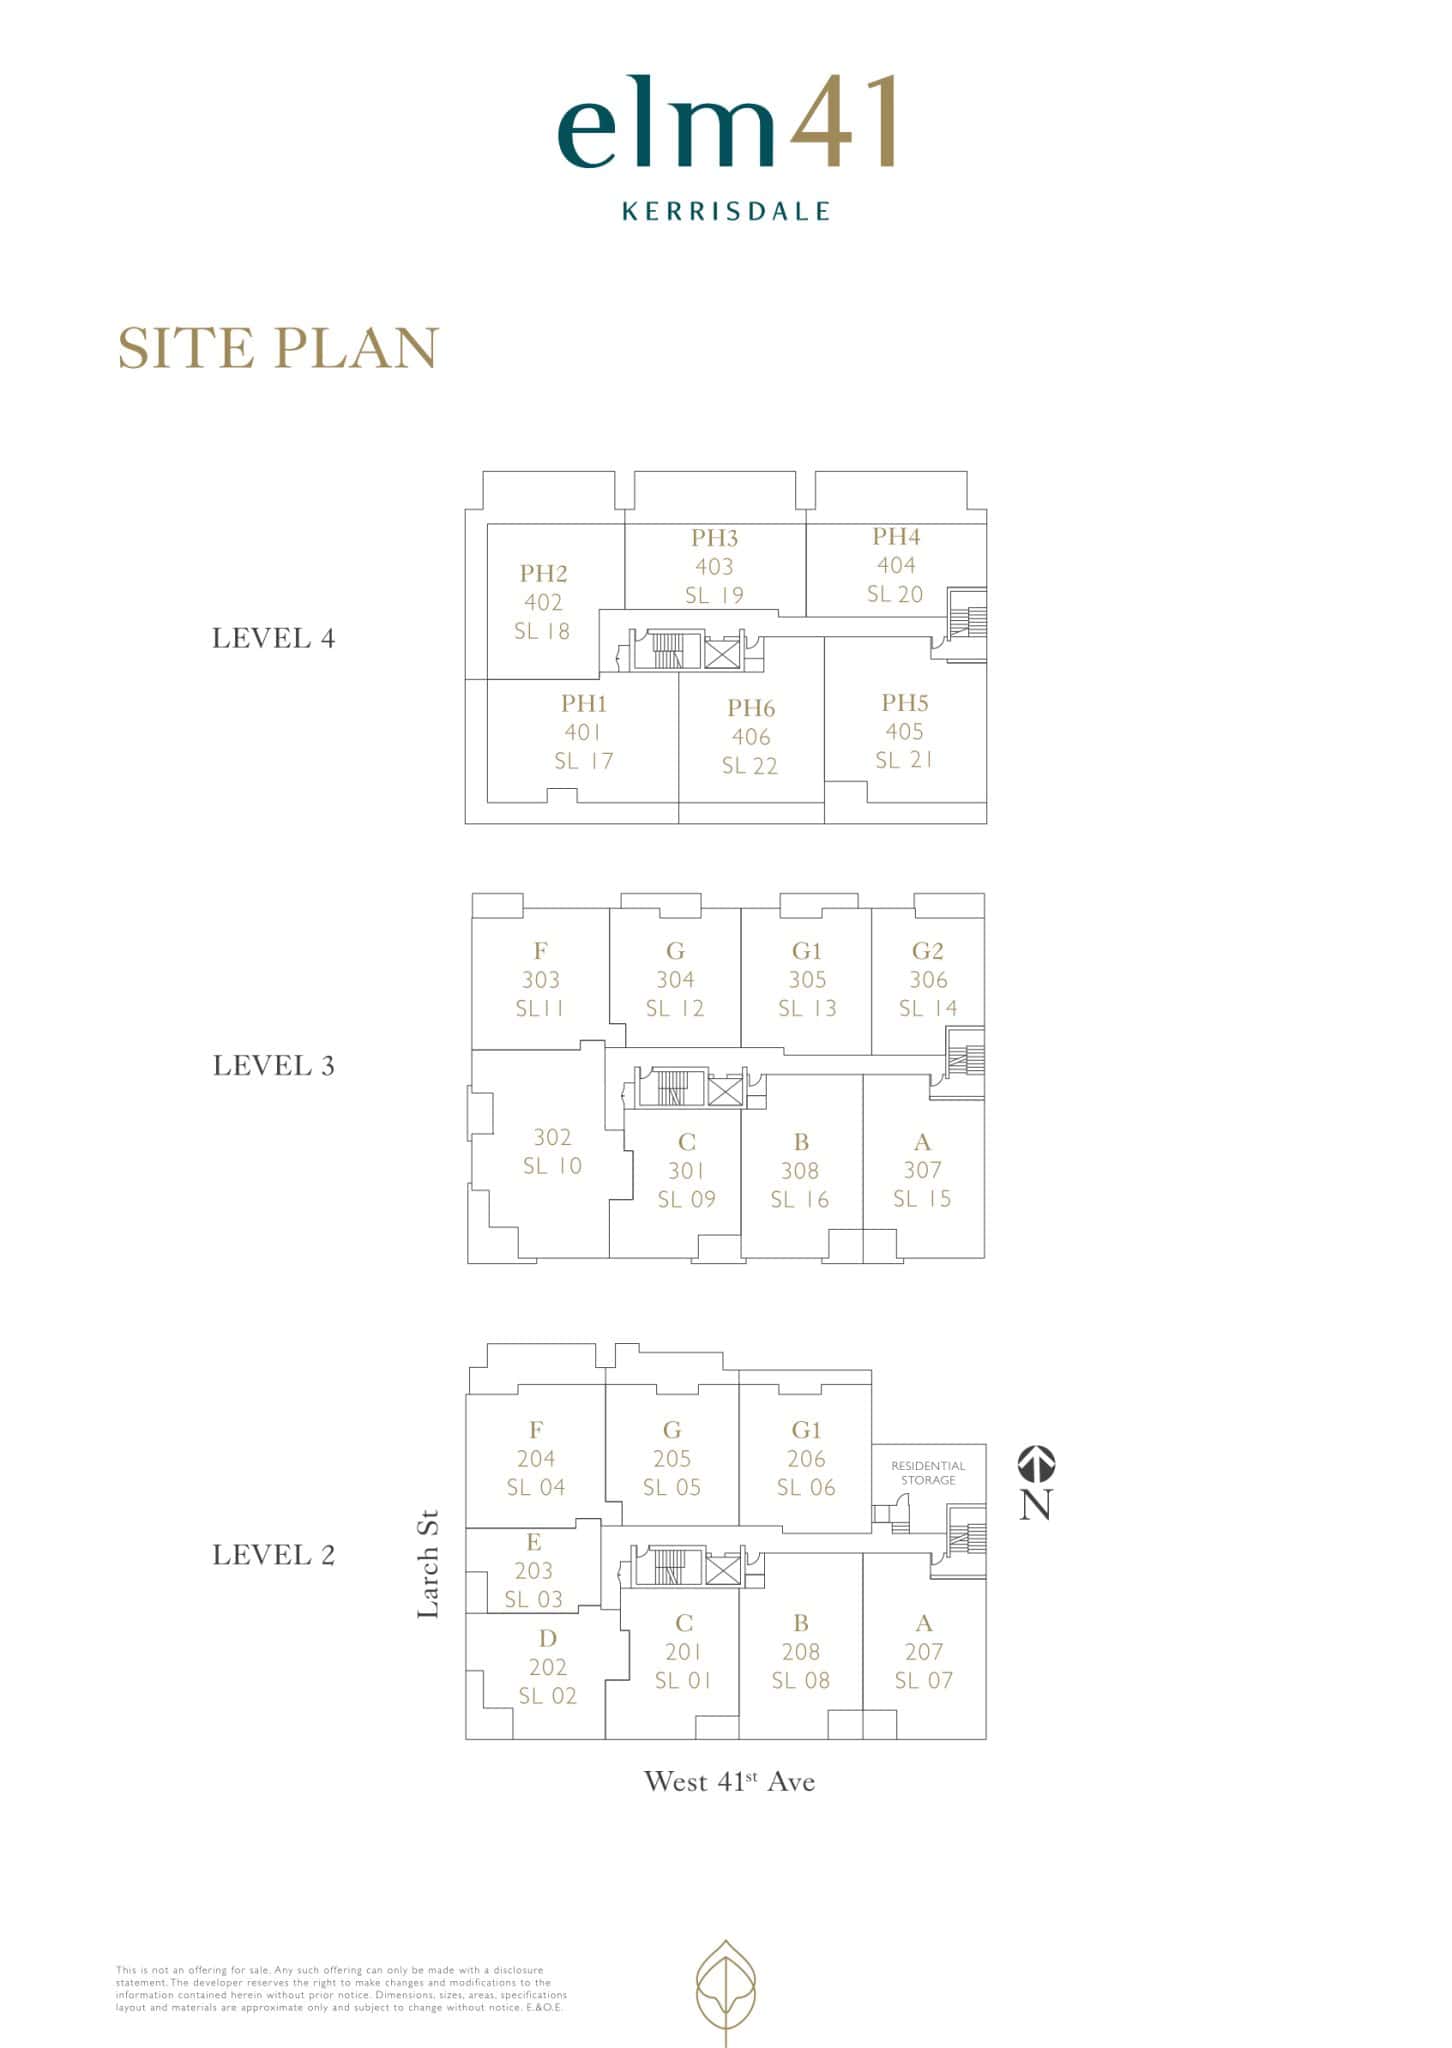 Elm 41 - Site Plan